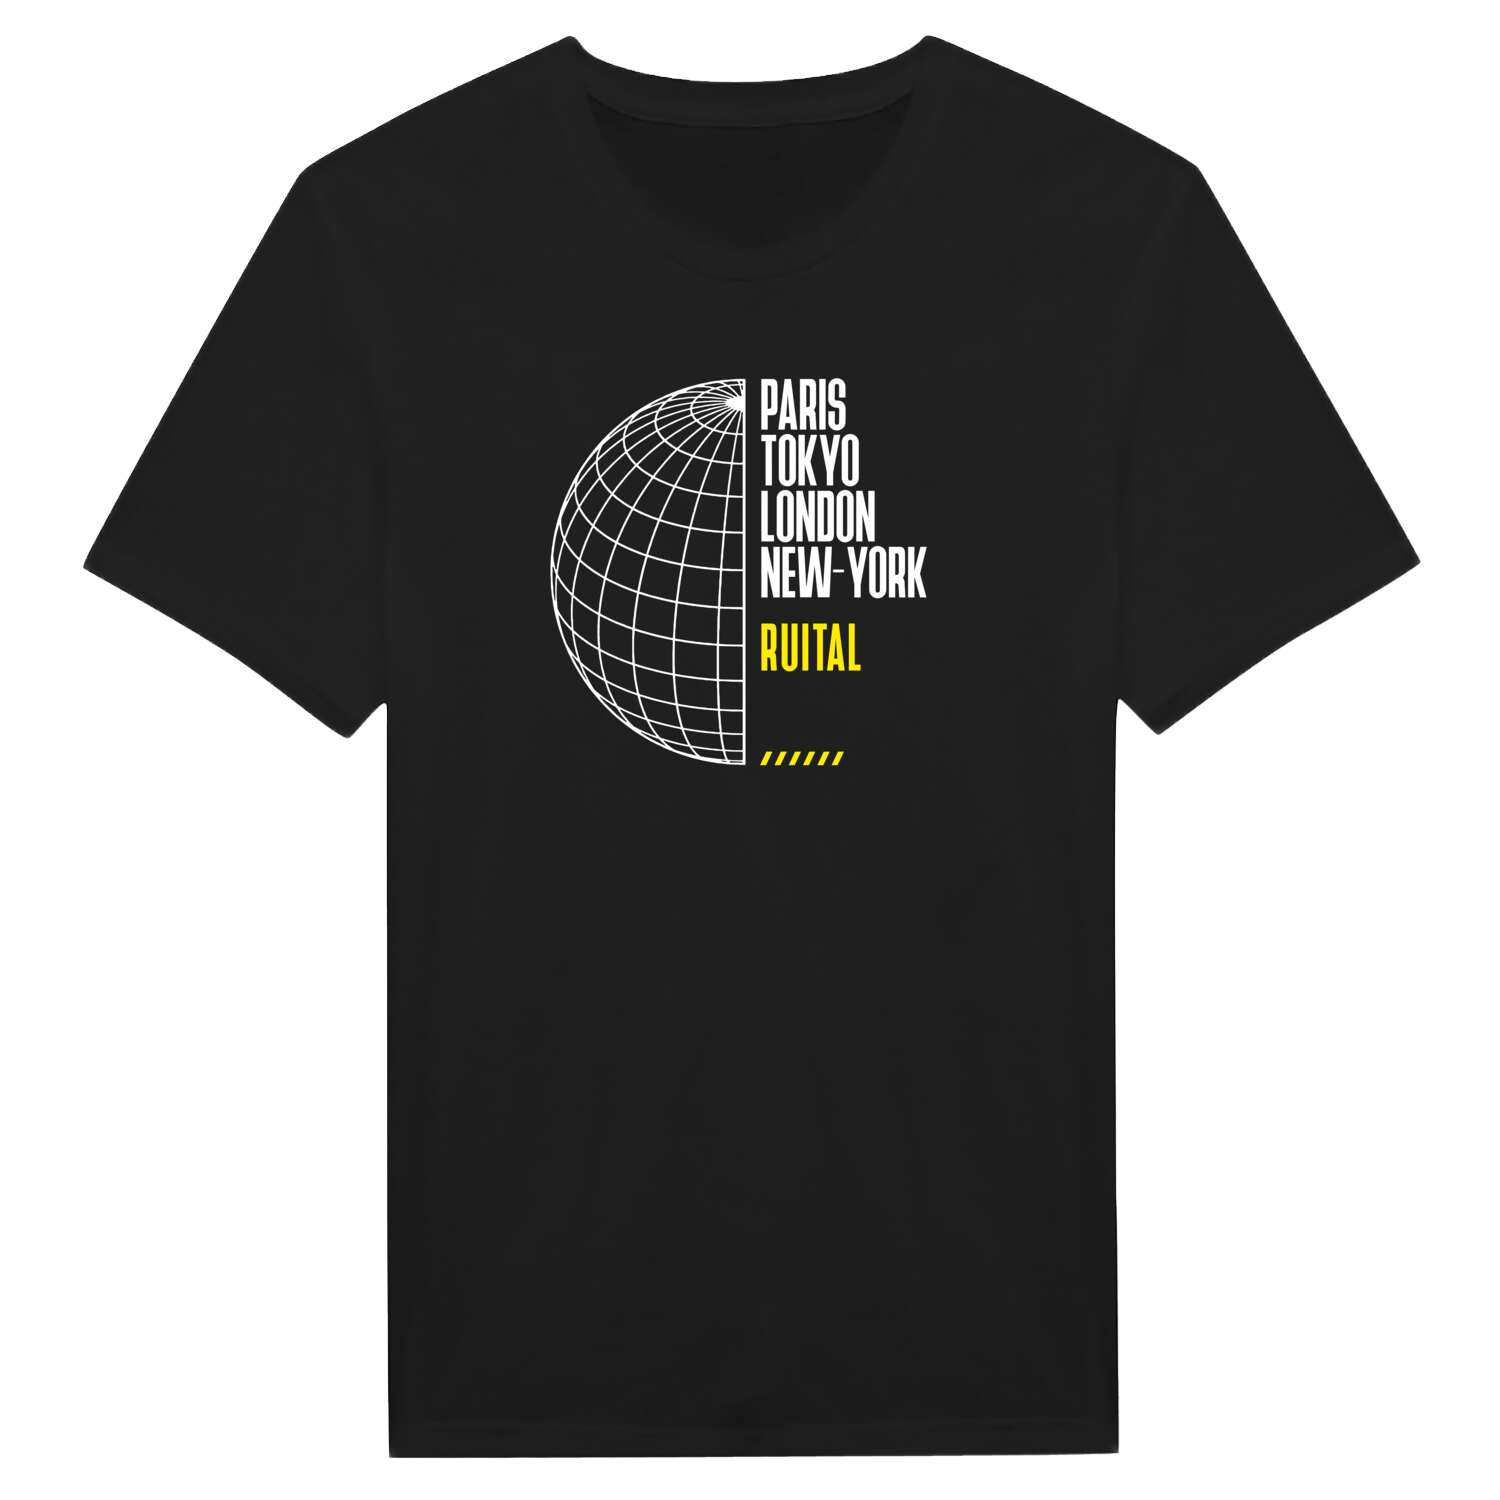 Ruital T-Shirt »Paris Tokyo London«